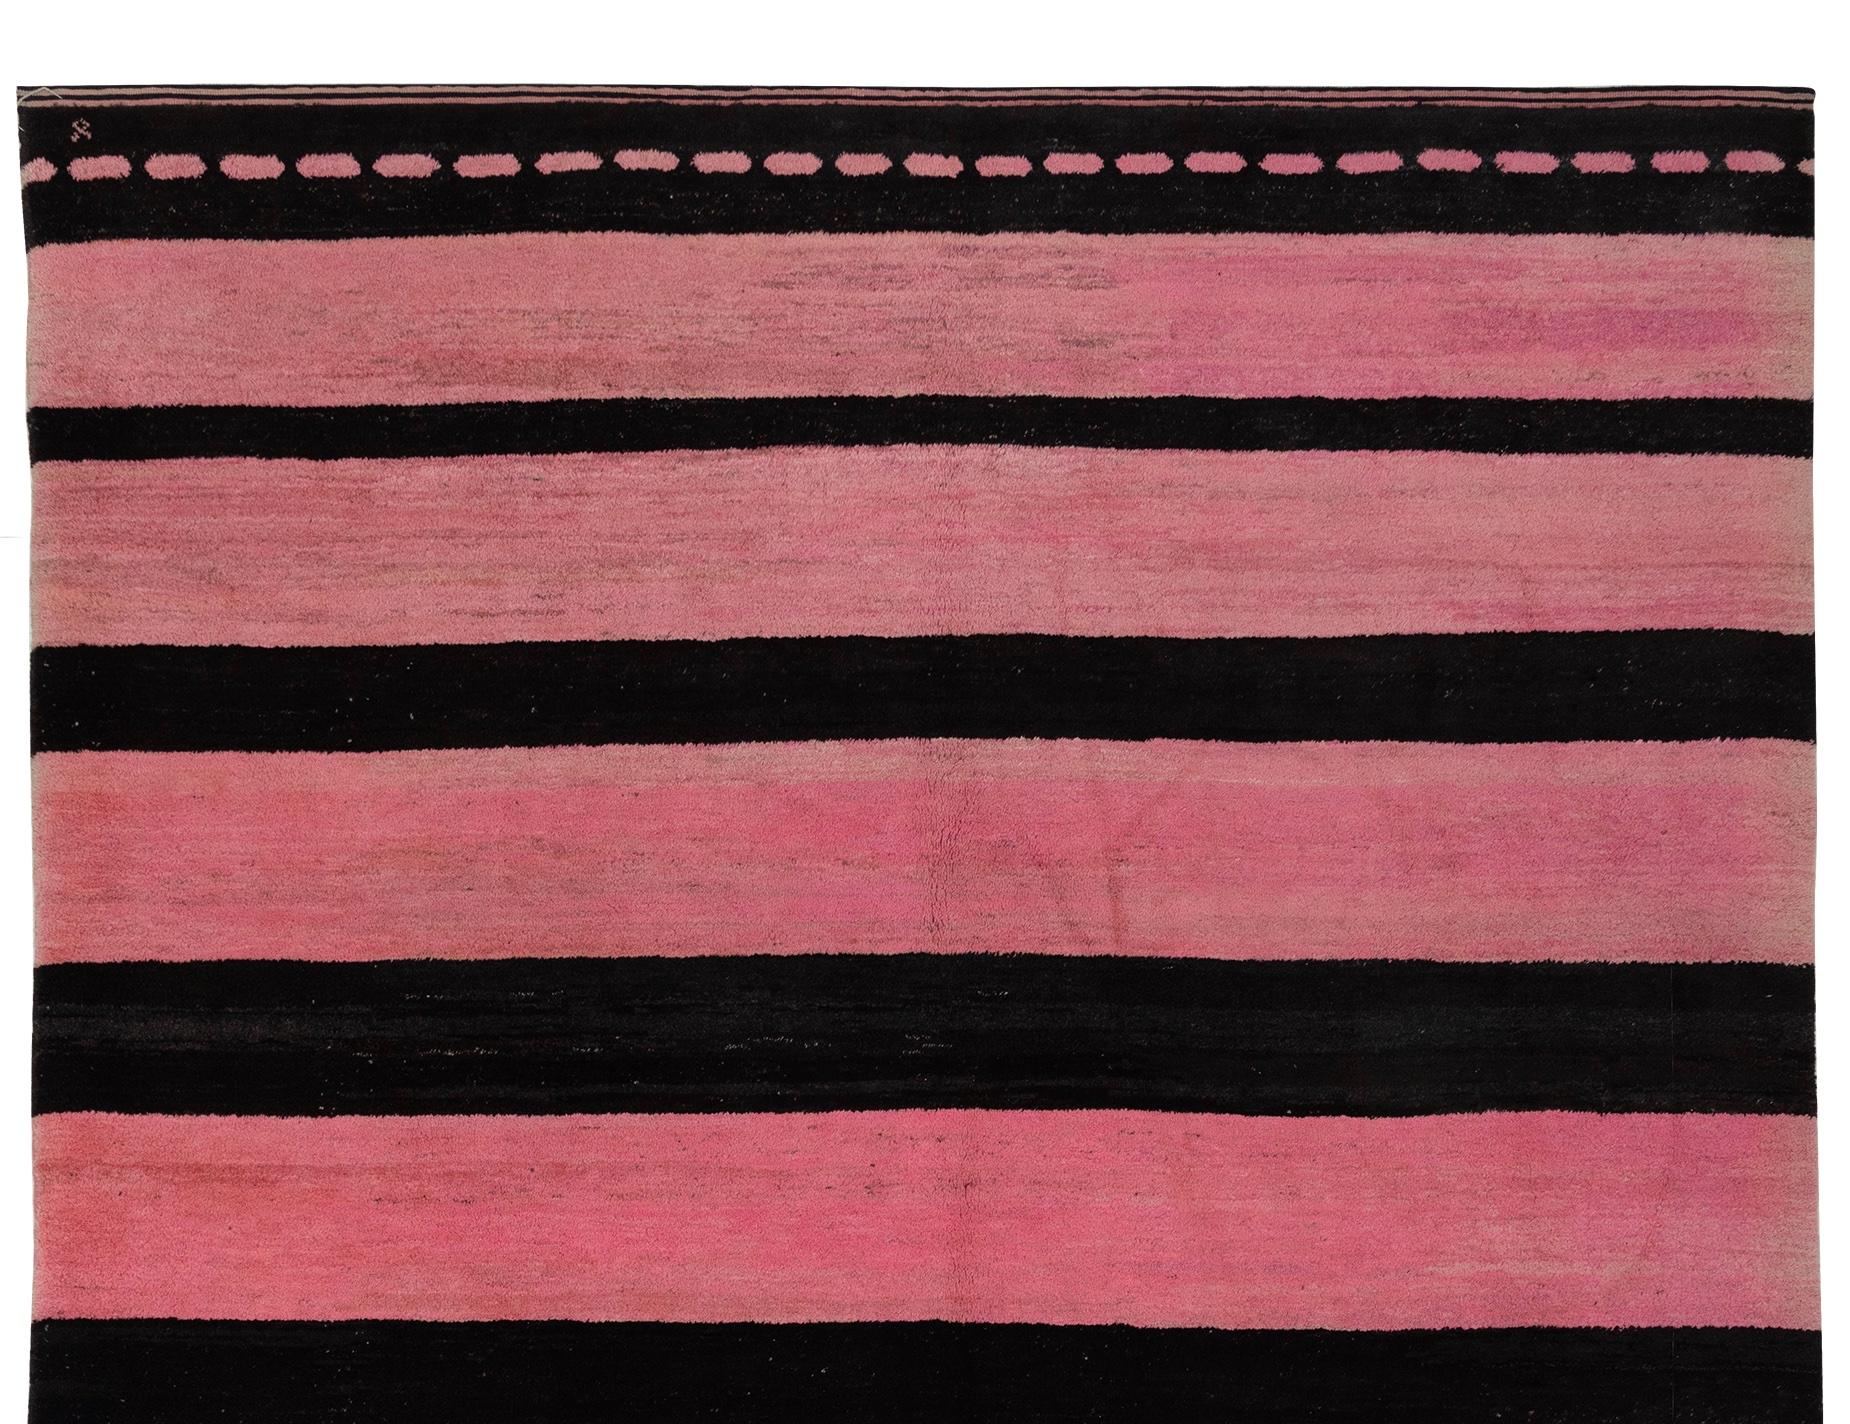 Turkish Old Yarn Rug Pink Black Striped For Sale